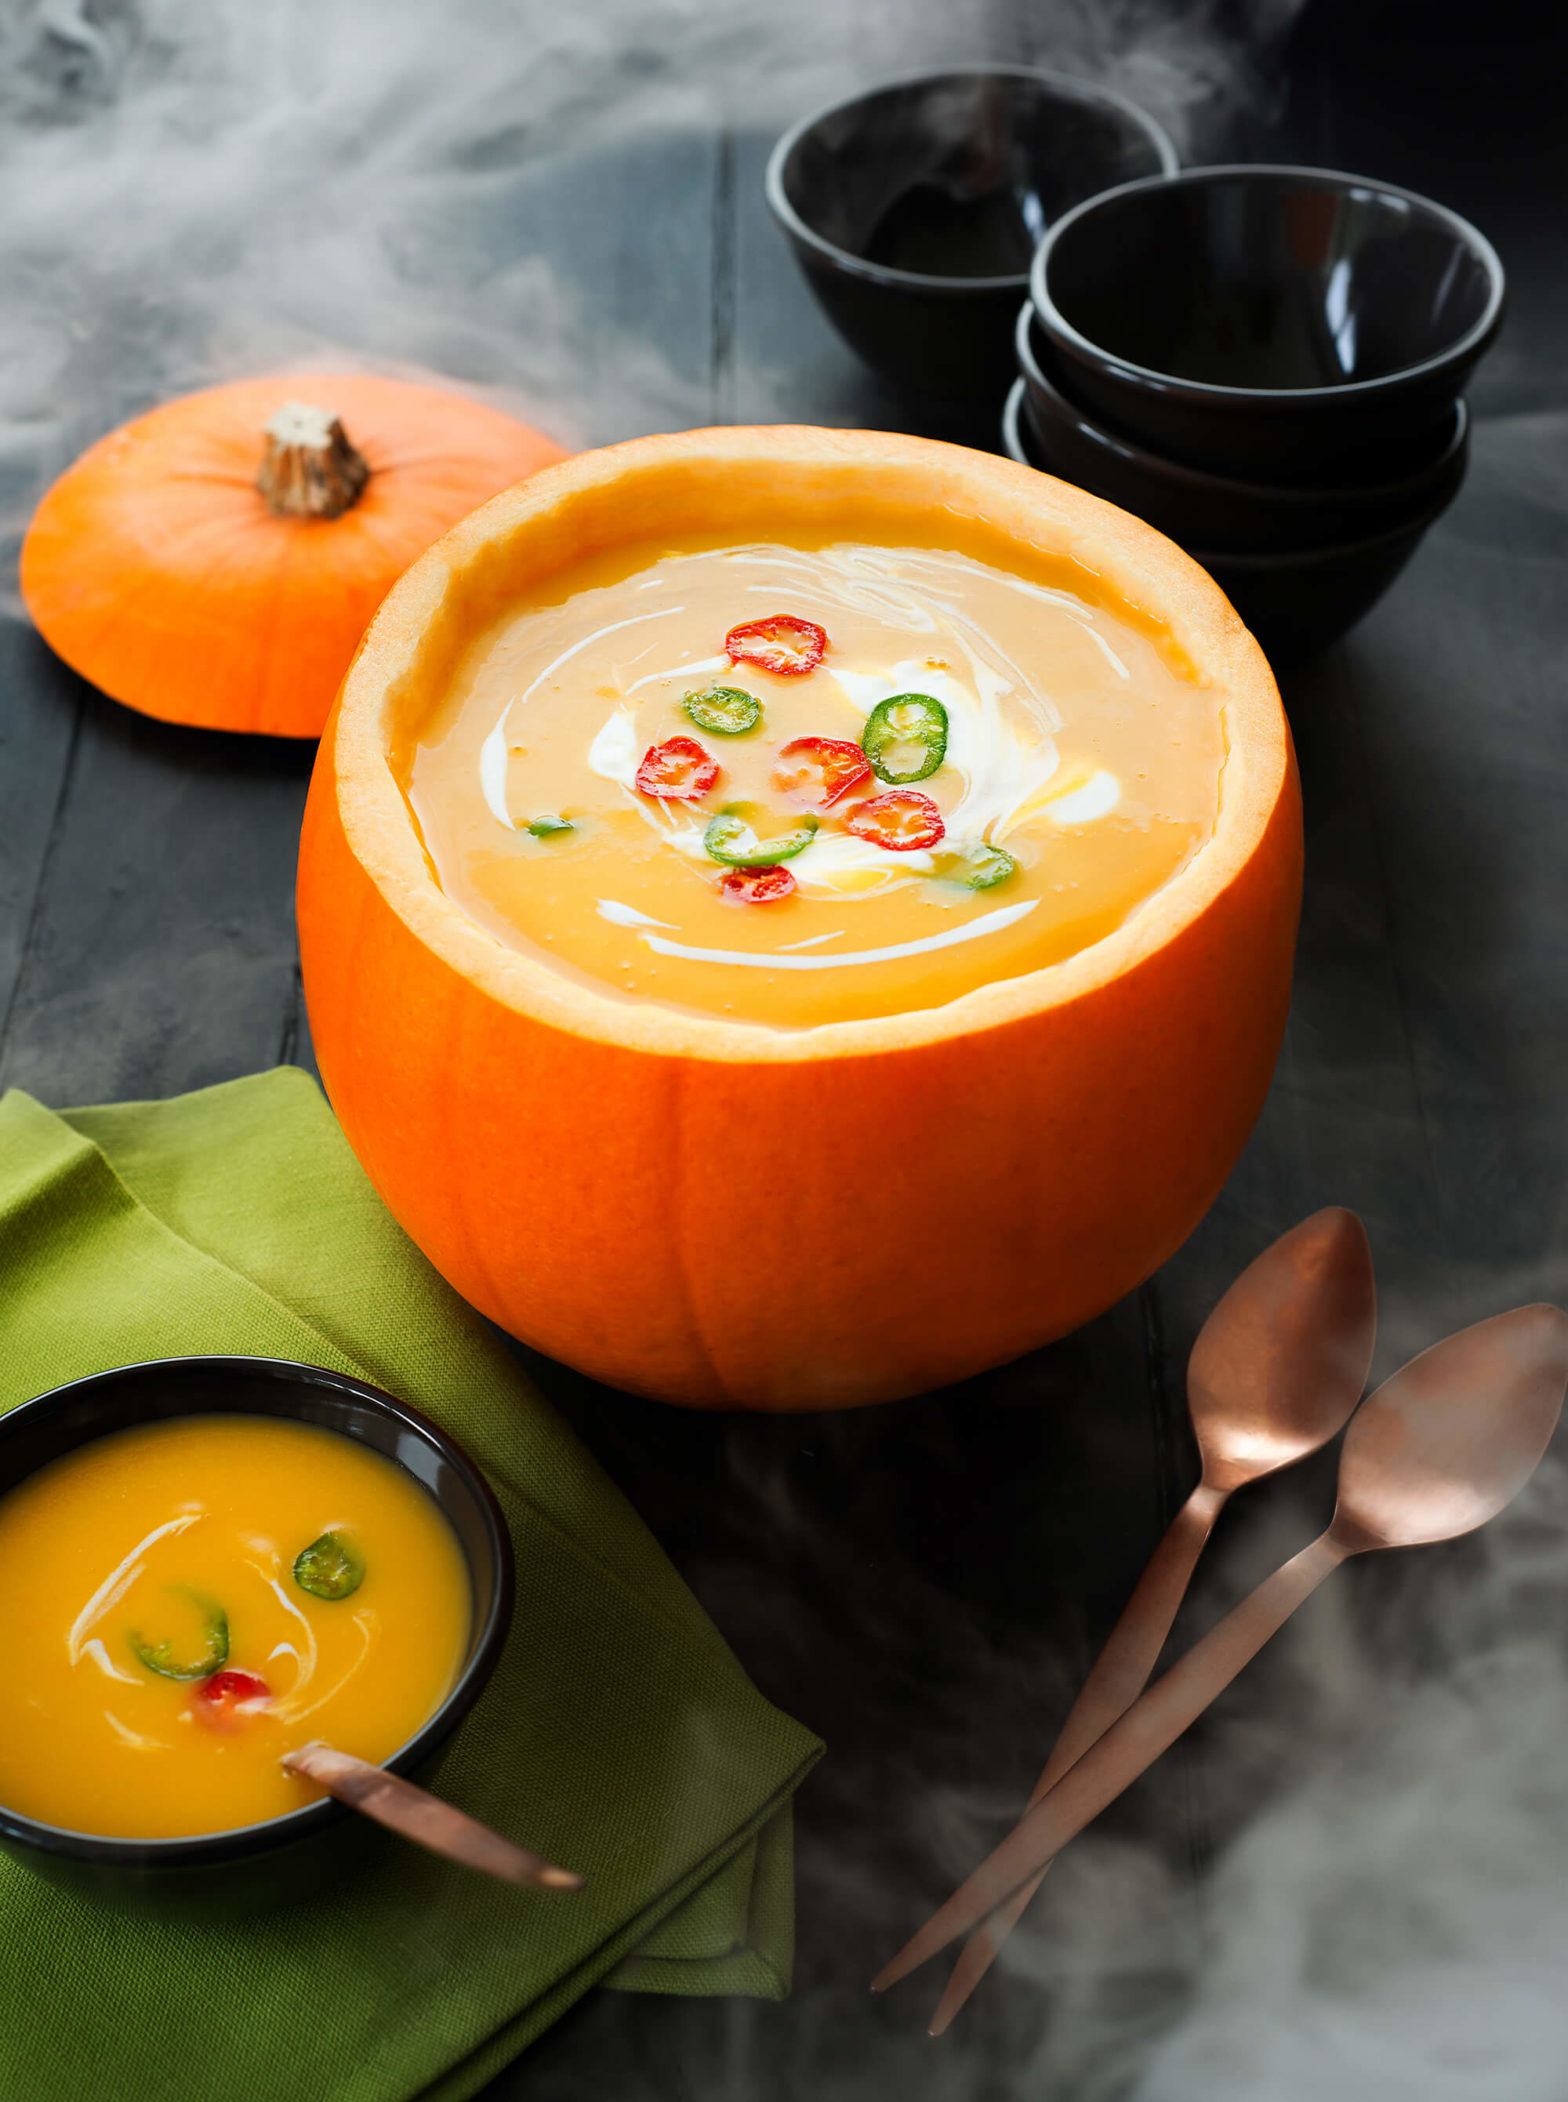 Image show Slimming World recipe - butternut squash soup